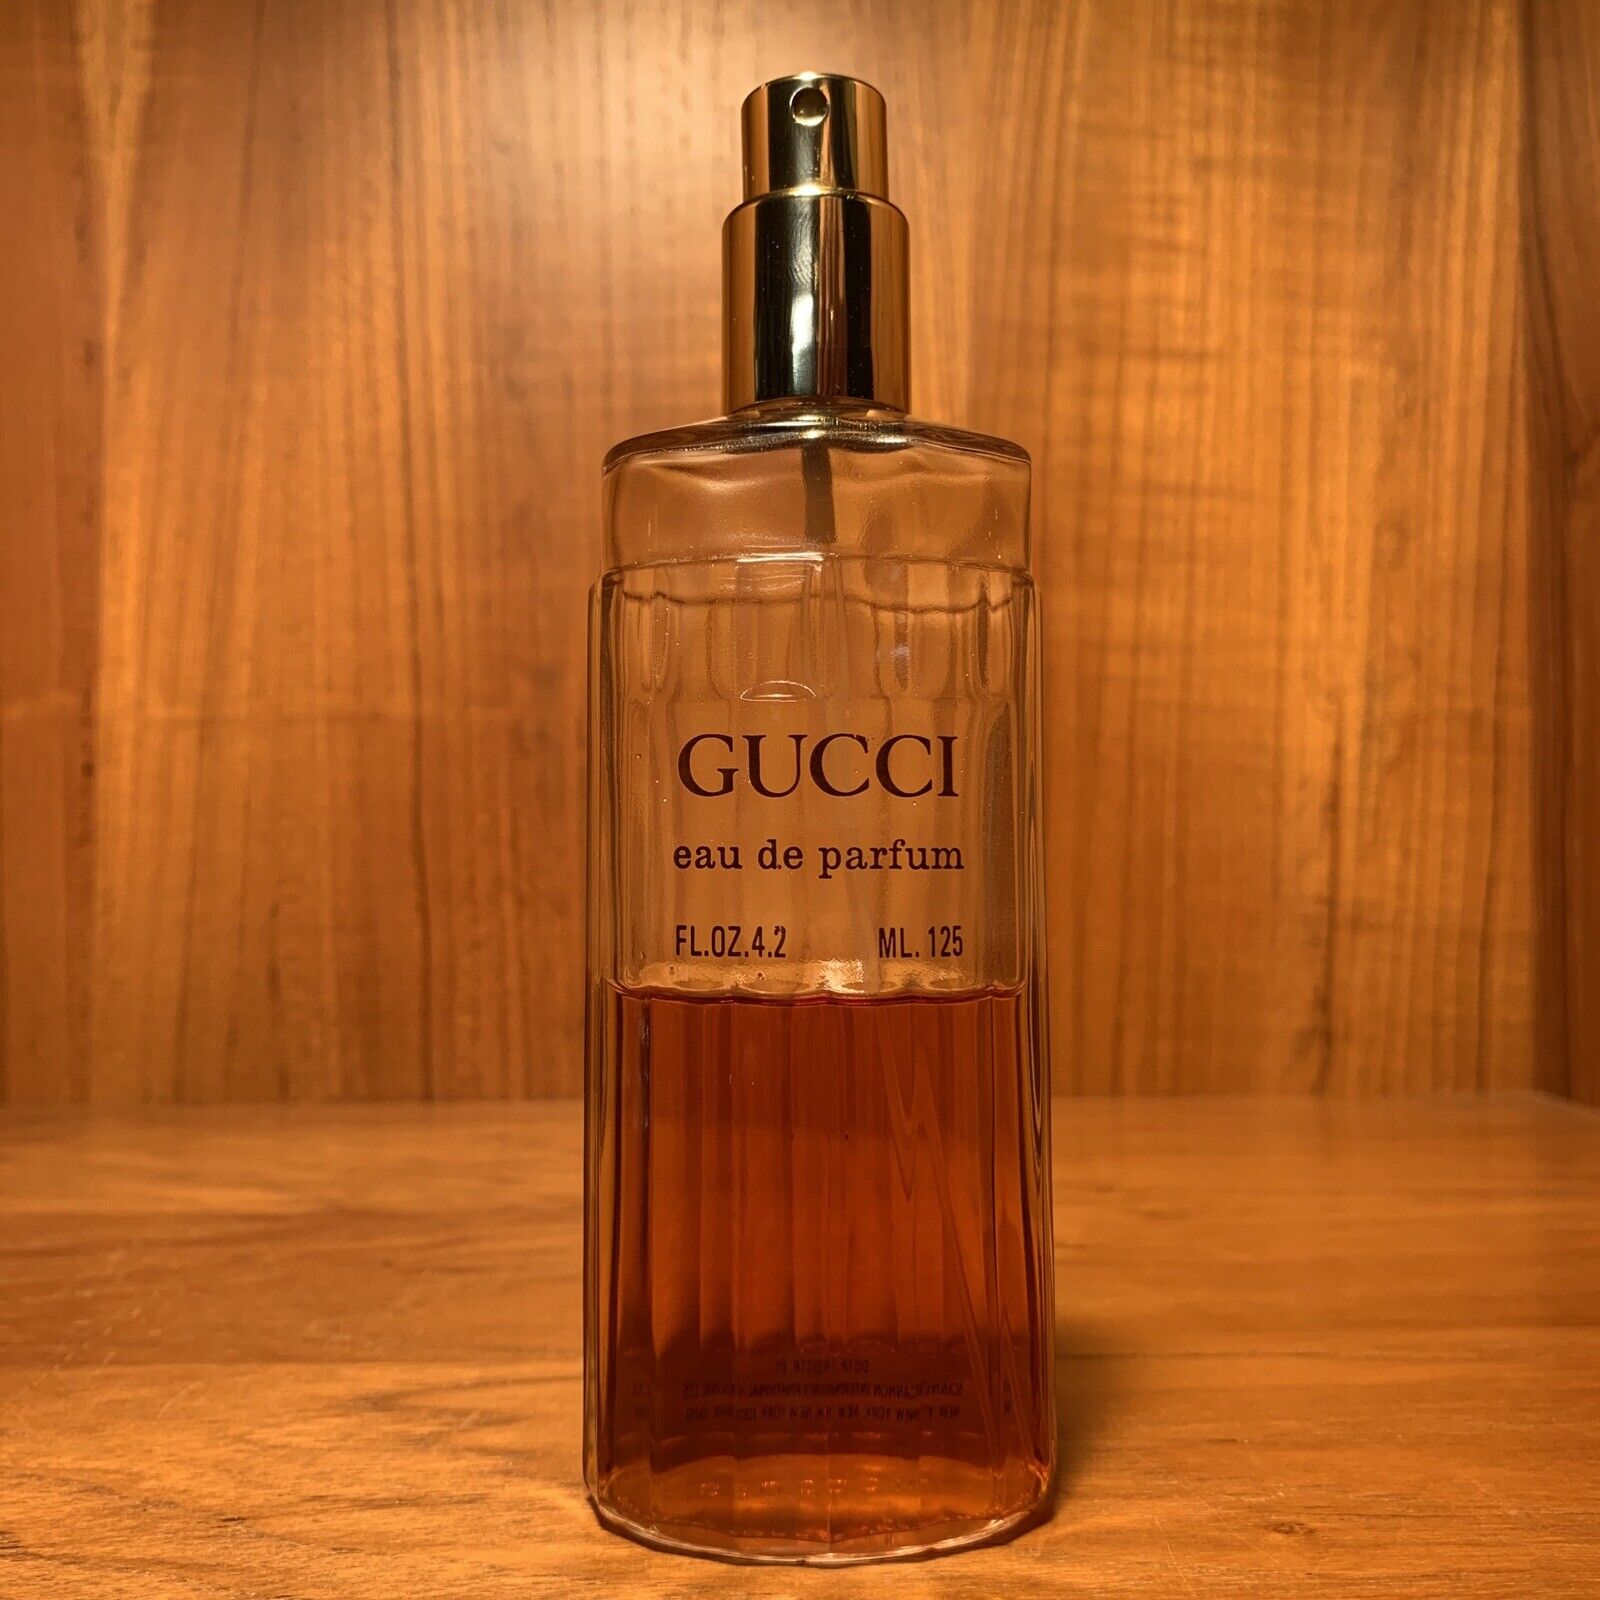 Gucci Eau de Parfum 1974 Vintage Original 125ml  4.2 oz Classic No Cap